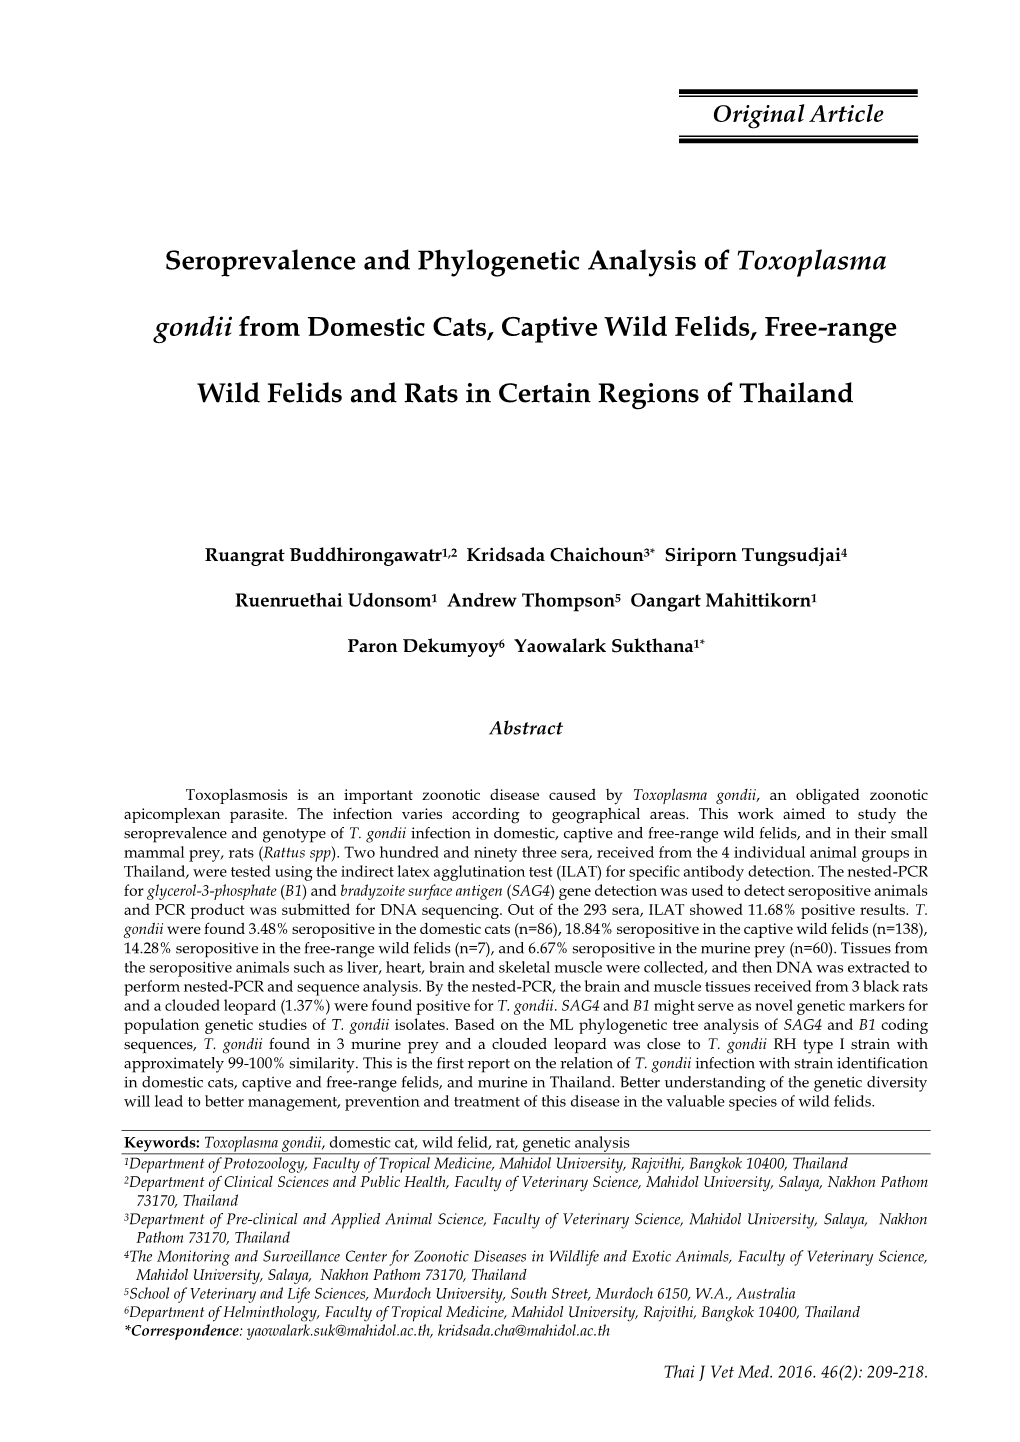 Seroprevalence and Phylogenetic Analysis of Toxoplasma Gondii From